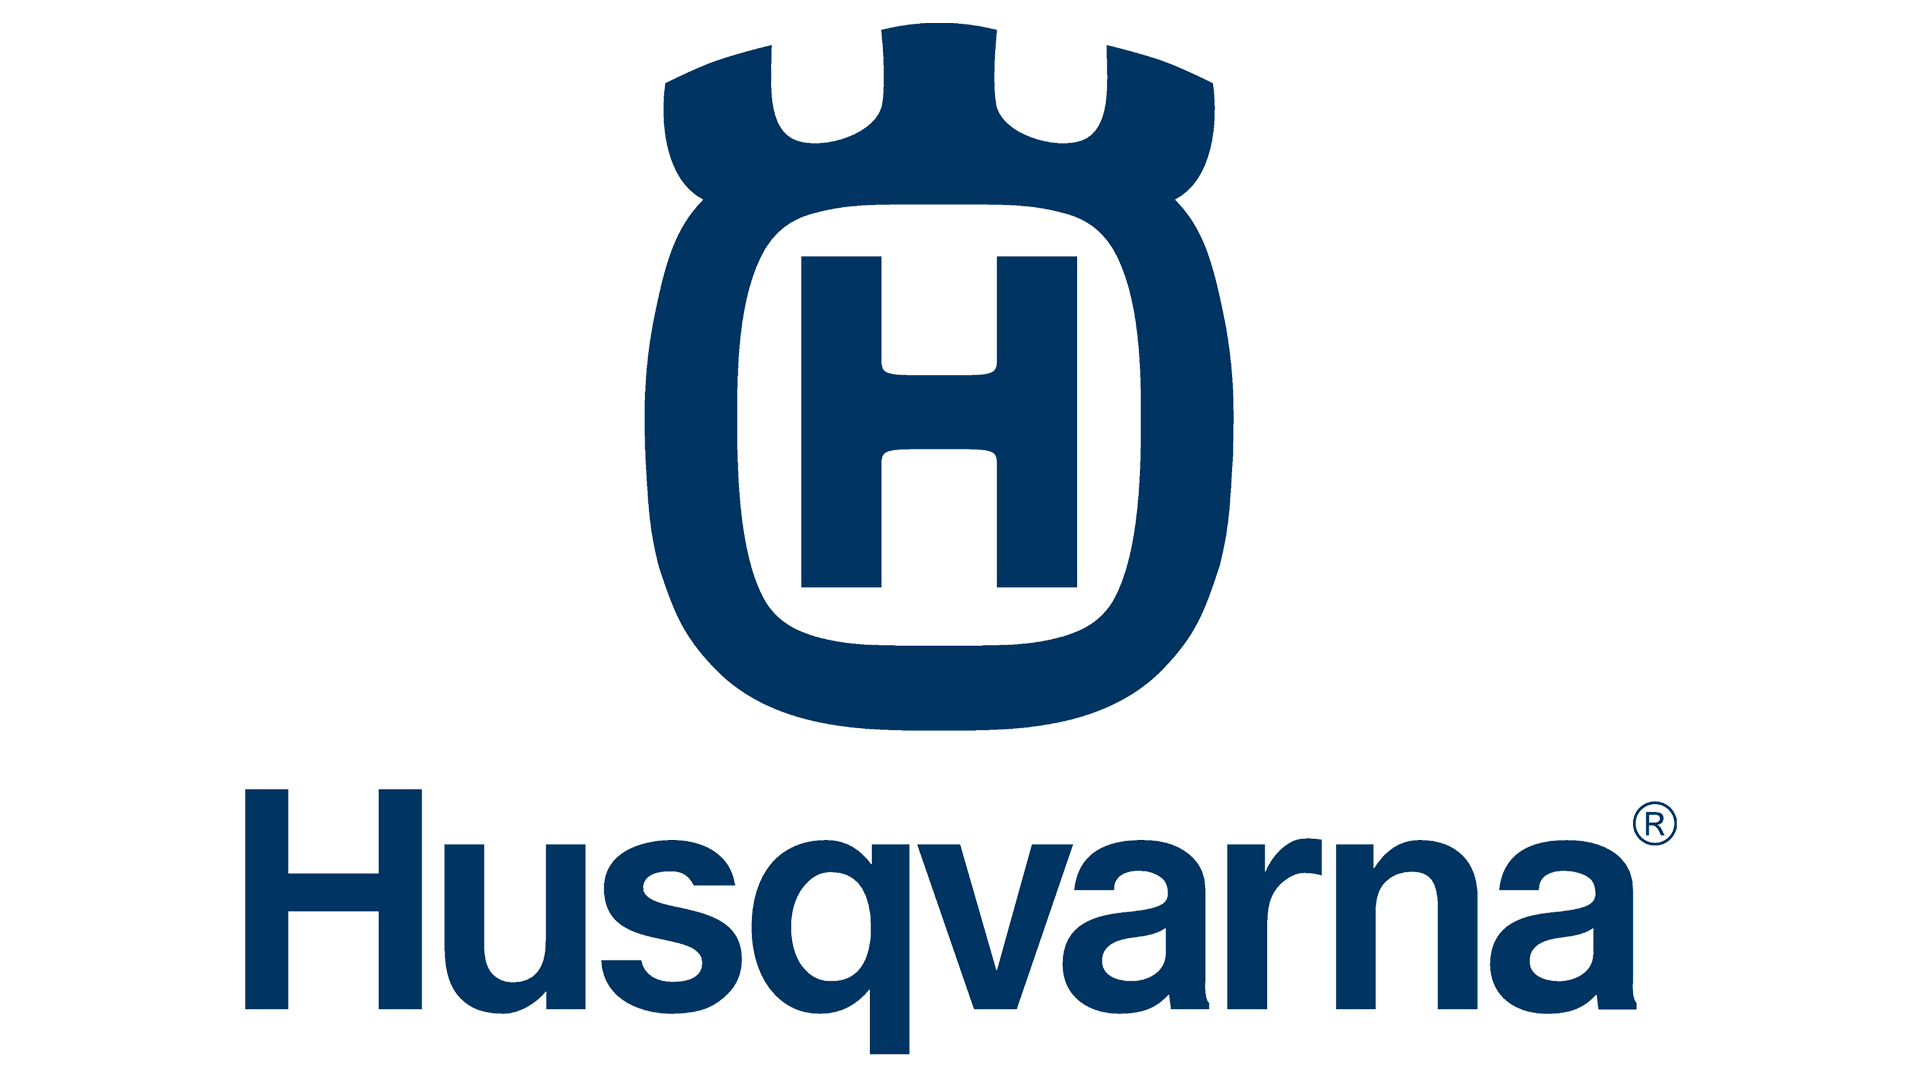 Husqvarna, Husqvarna 531300441 H80-72 Genuine OEM 20" Chain